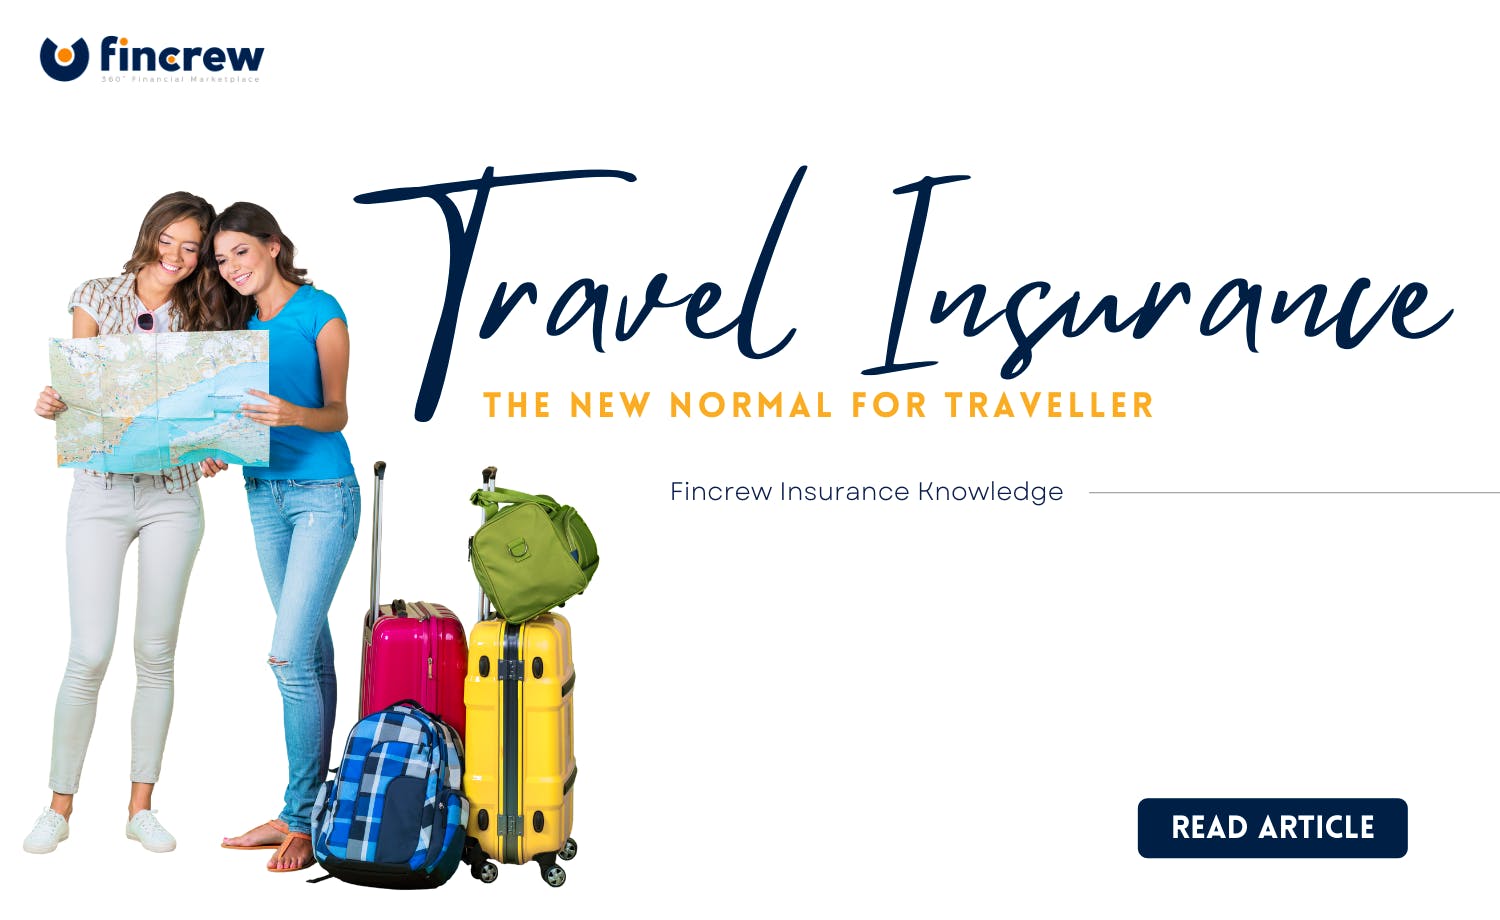 Travel Insurance For The New Normal Traveller